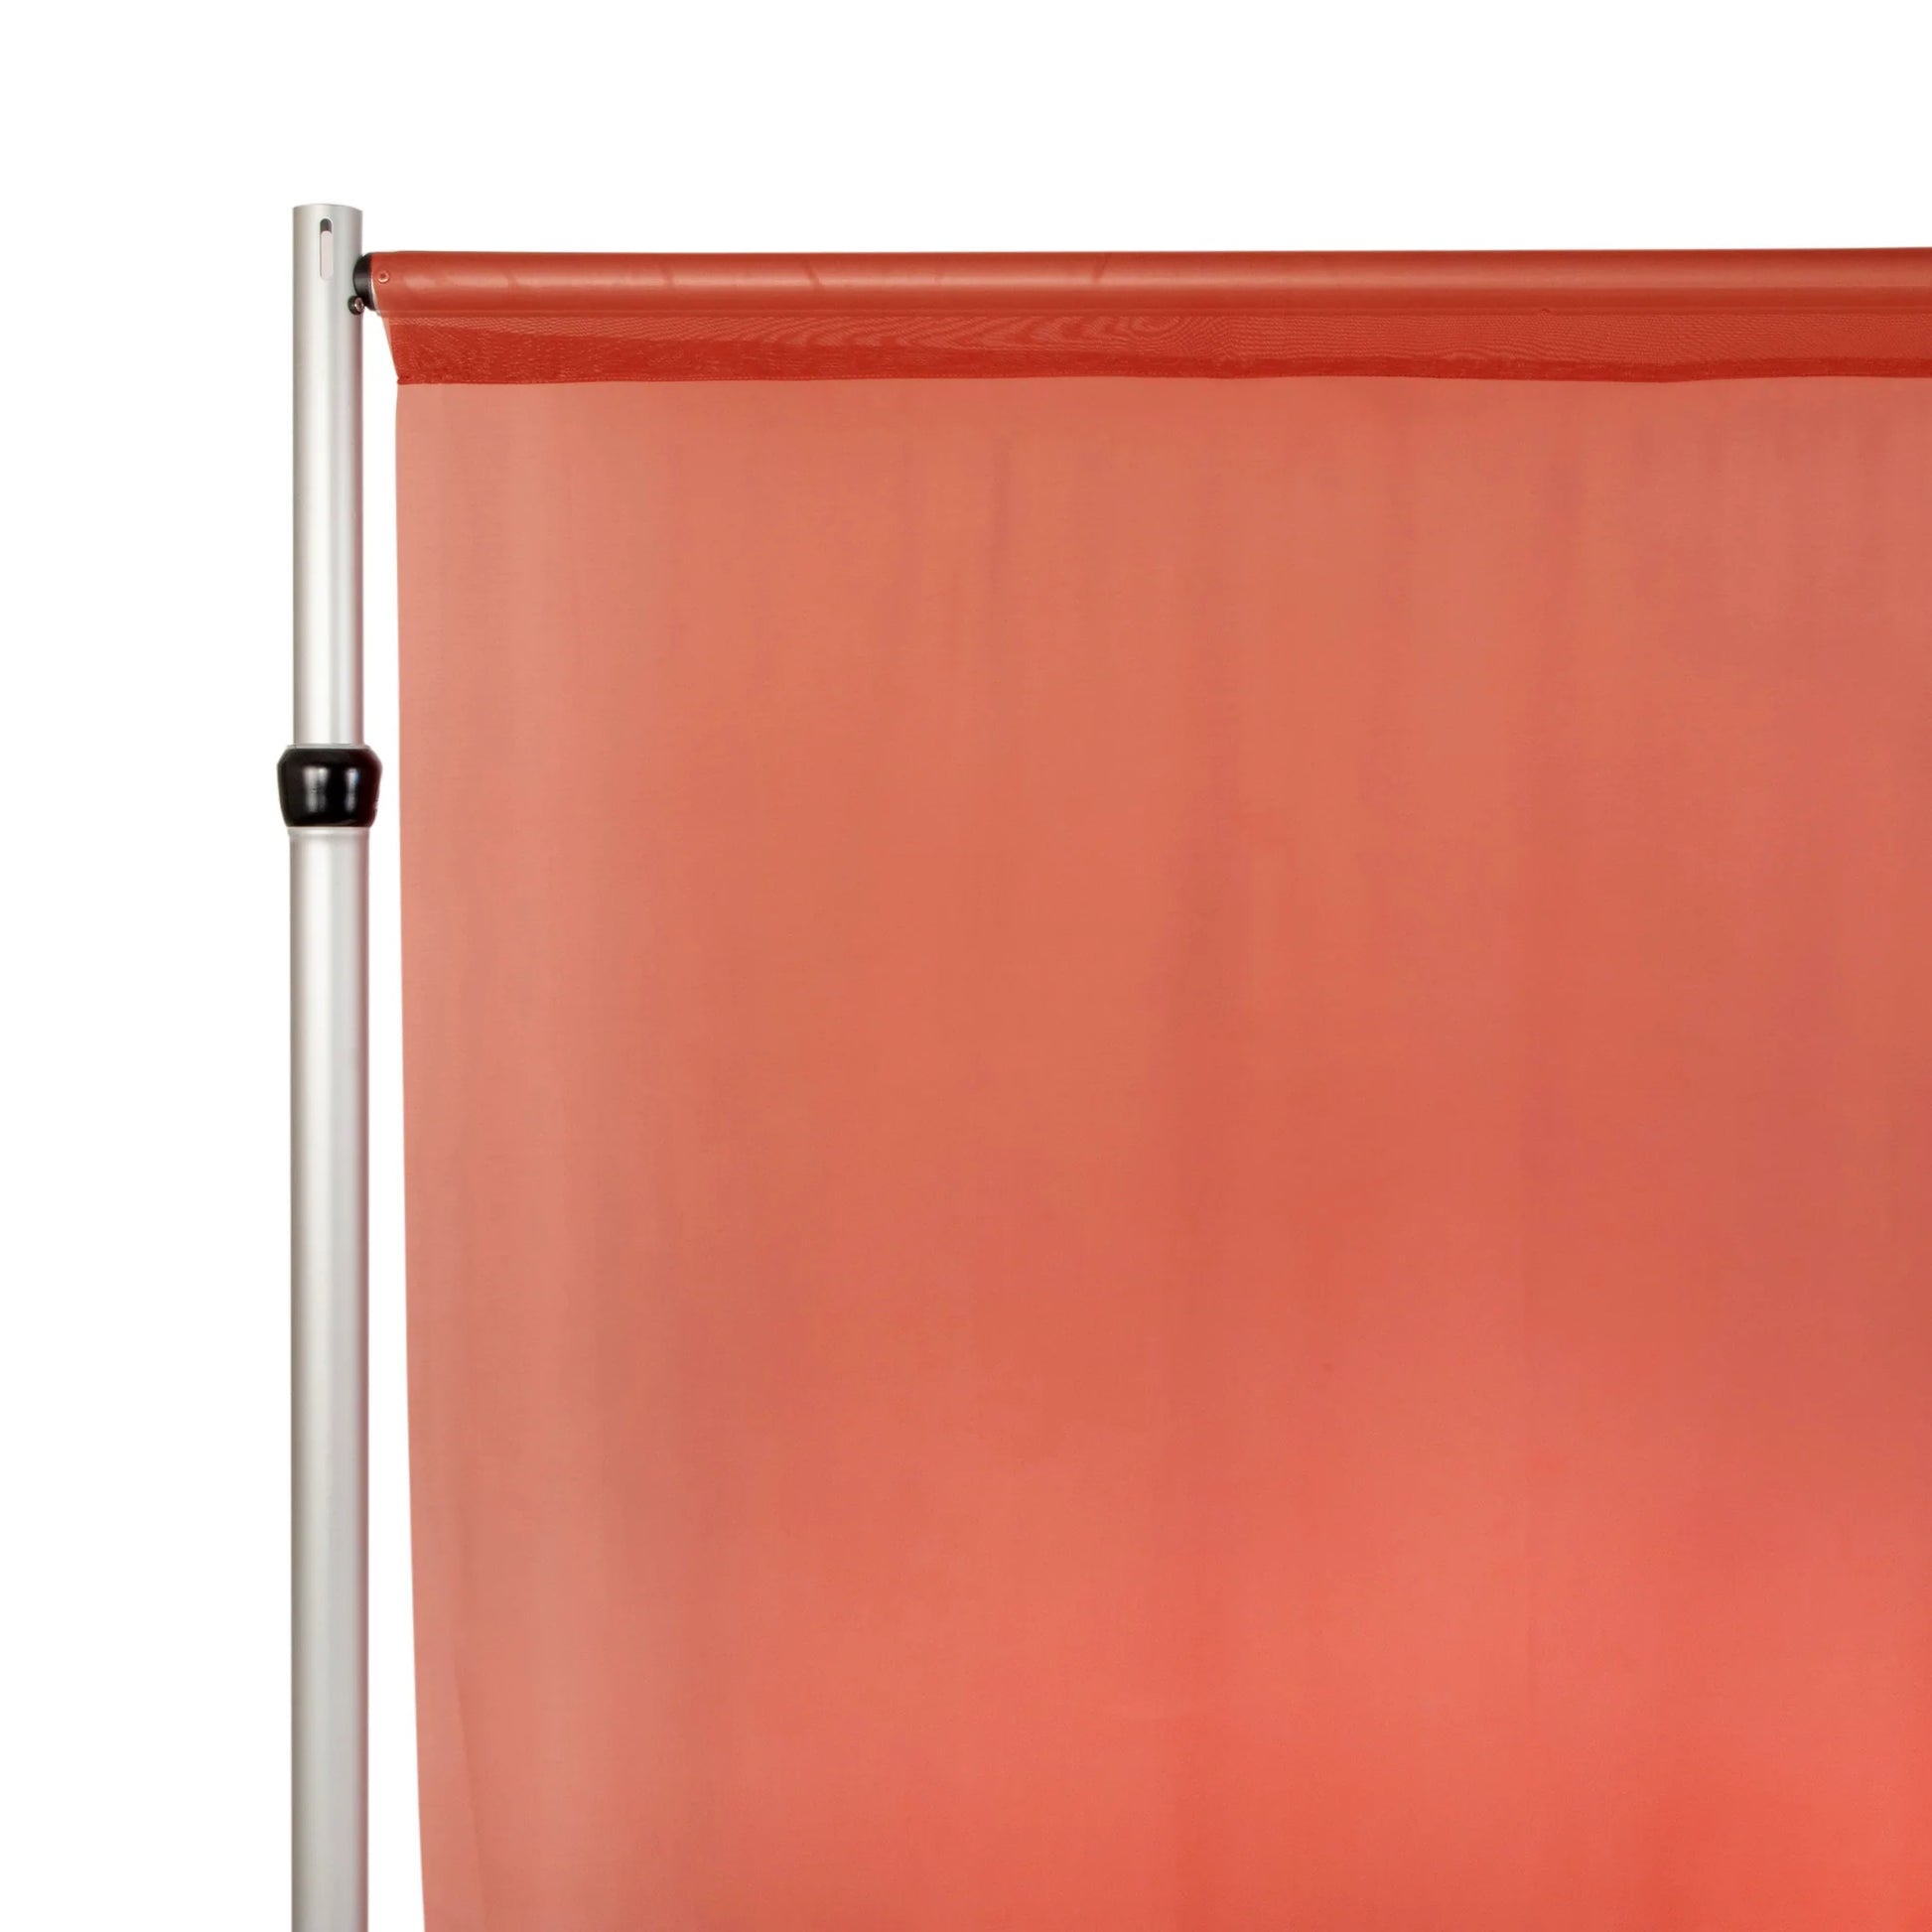 Chiffon Curtain Drape 12ft H x 58" W Panel - Rust